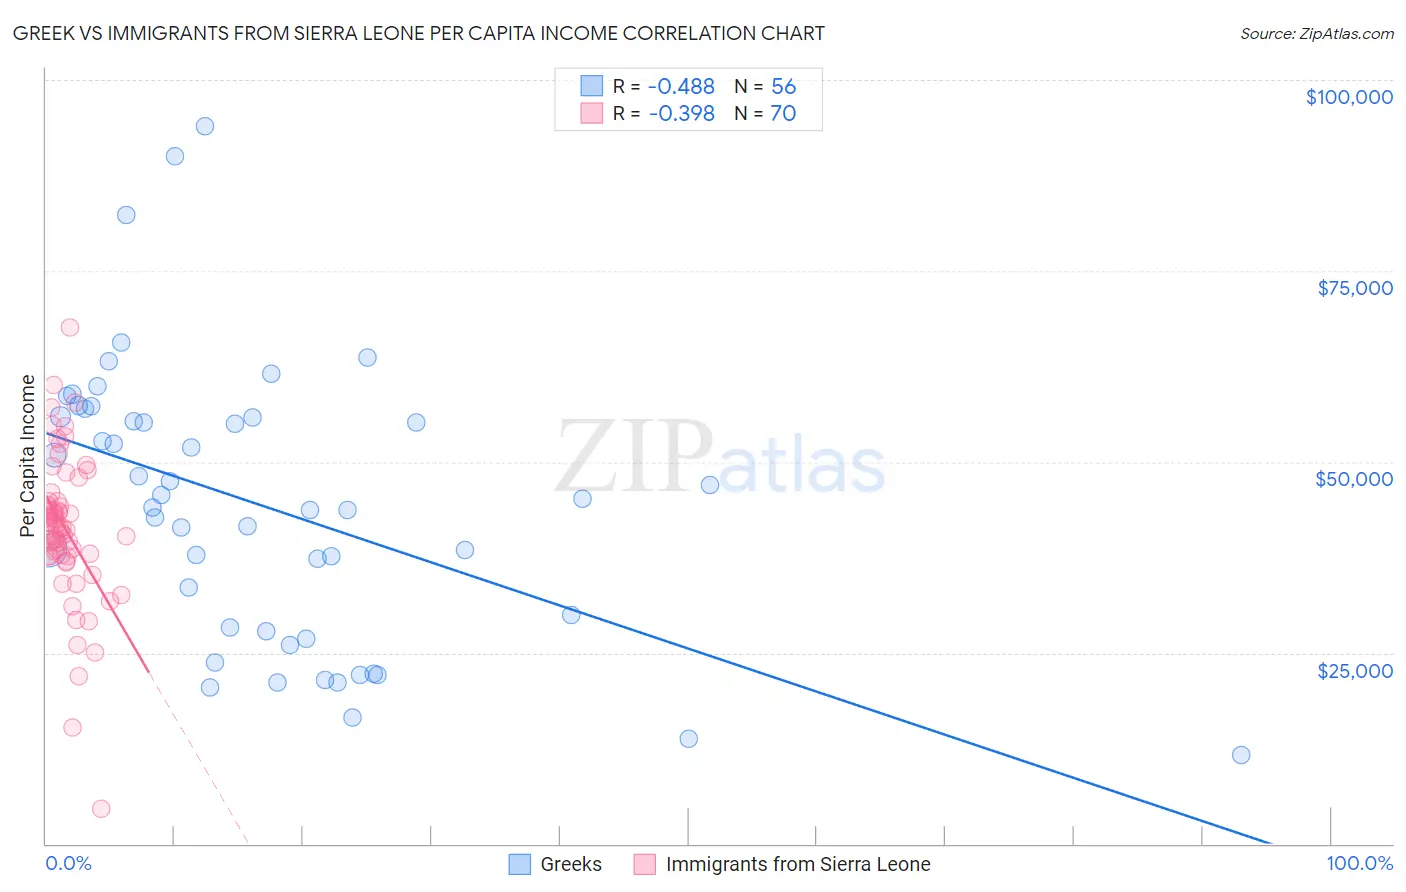 Greek vs Immigrants from Sierra Leone Per Capita Income